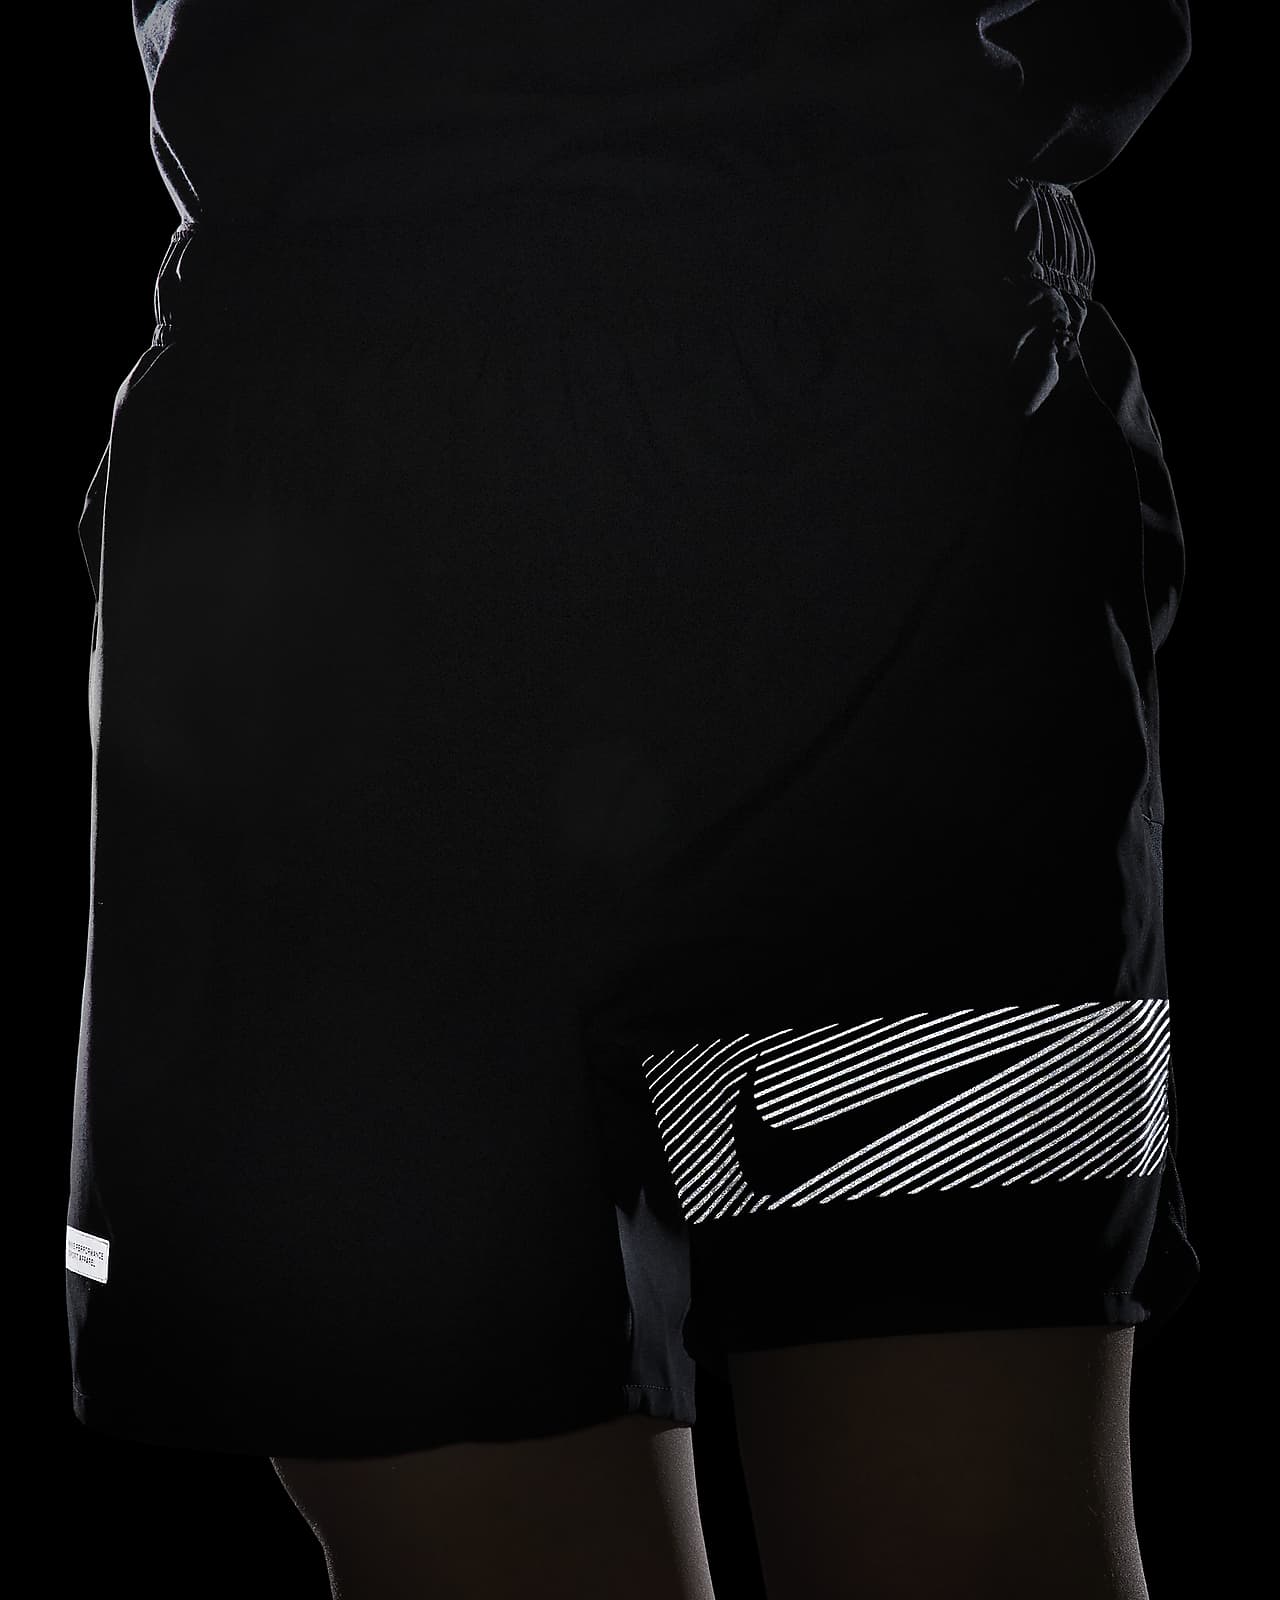 Women's Nike Canada National Team Distance Boy Shorts – Athletics